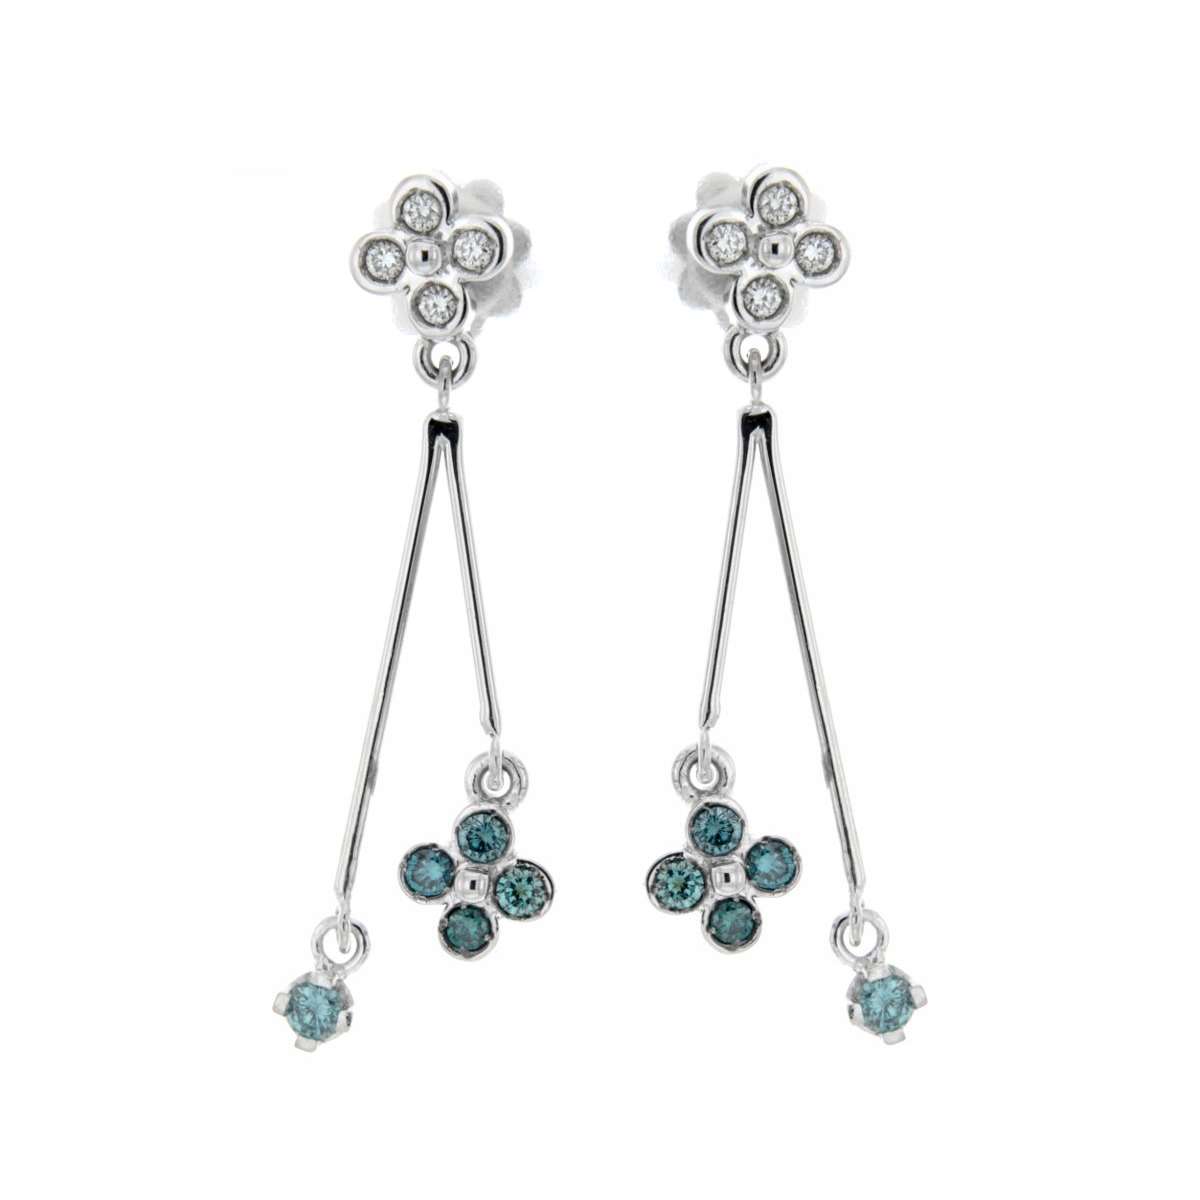 Dangling earrings 0.56 carats top-notch fancy color and white diamonds G-VS1